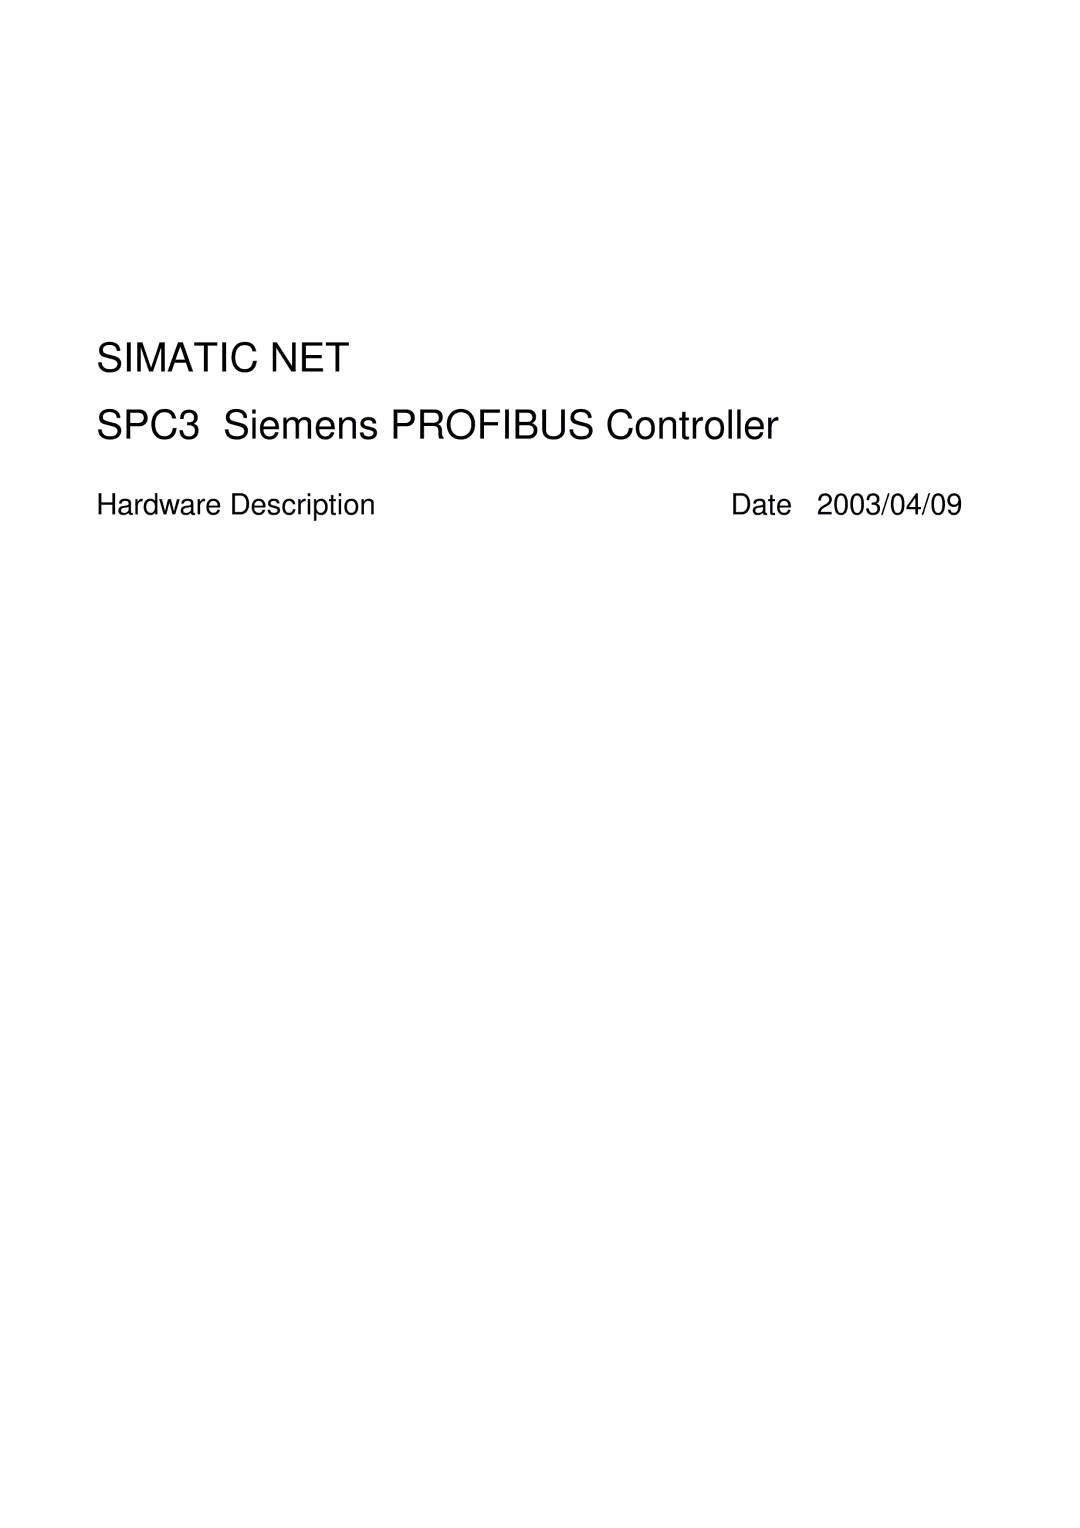 Siemens SPC3 manual Simatic NET 